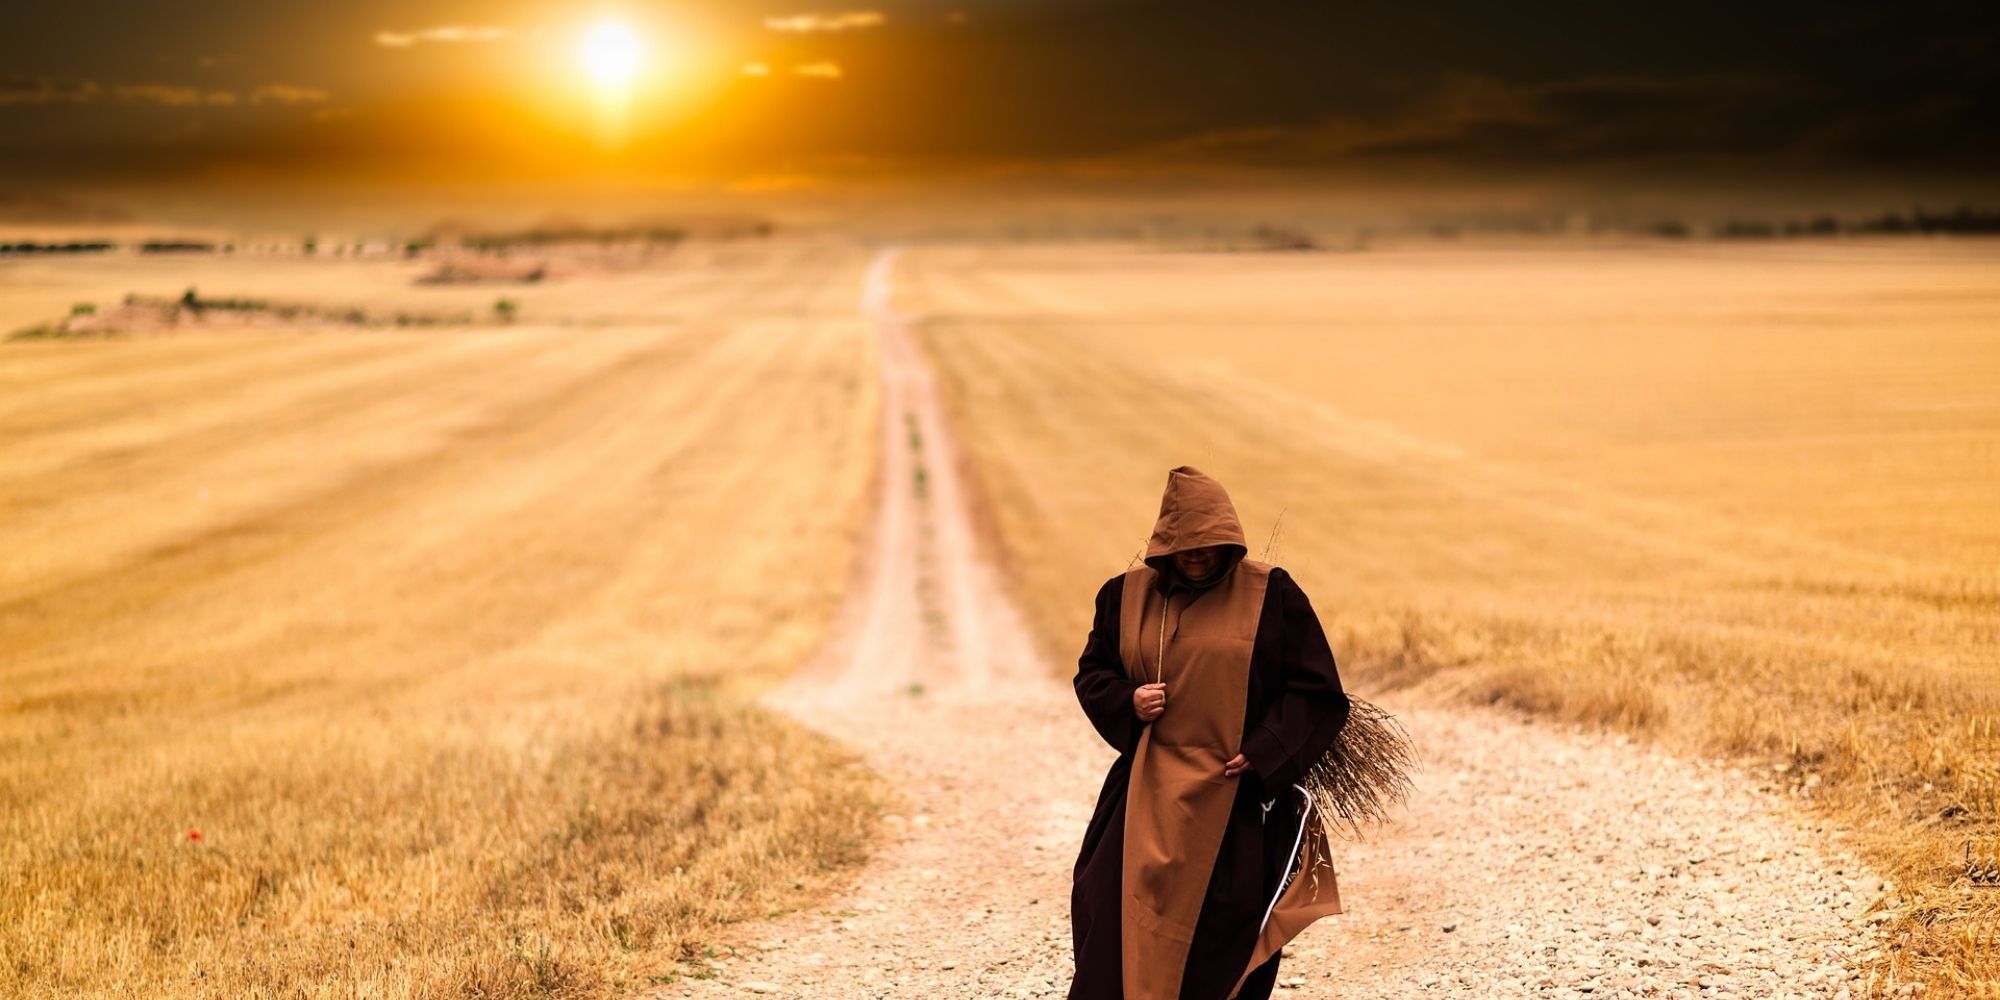 A monk walking through a field at sunset. 